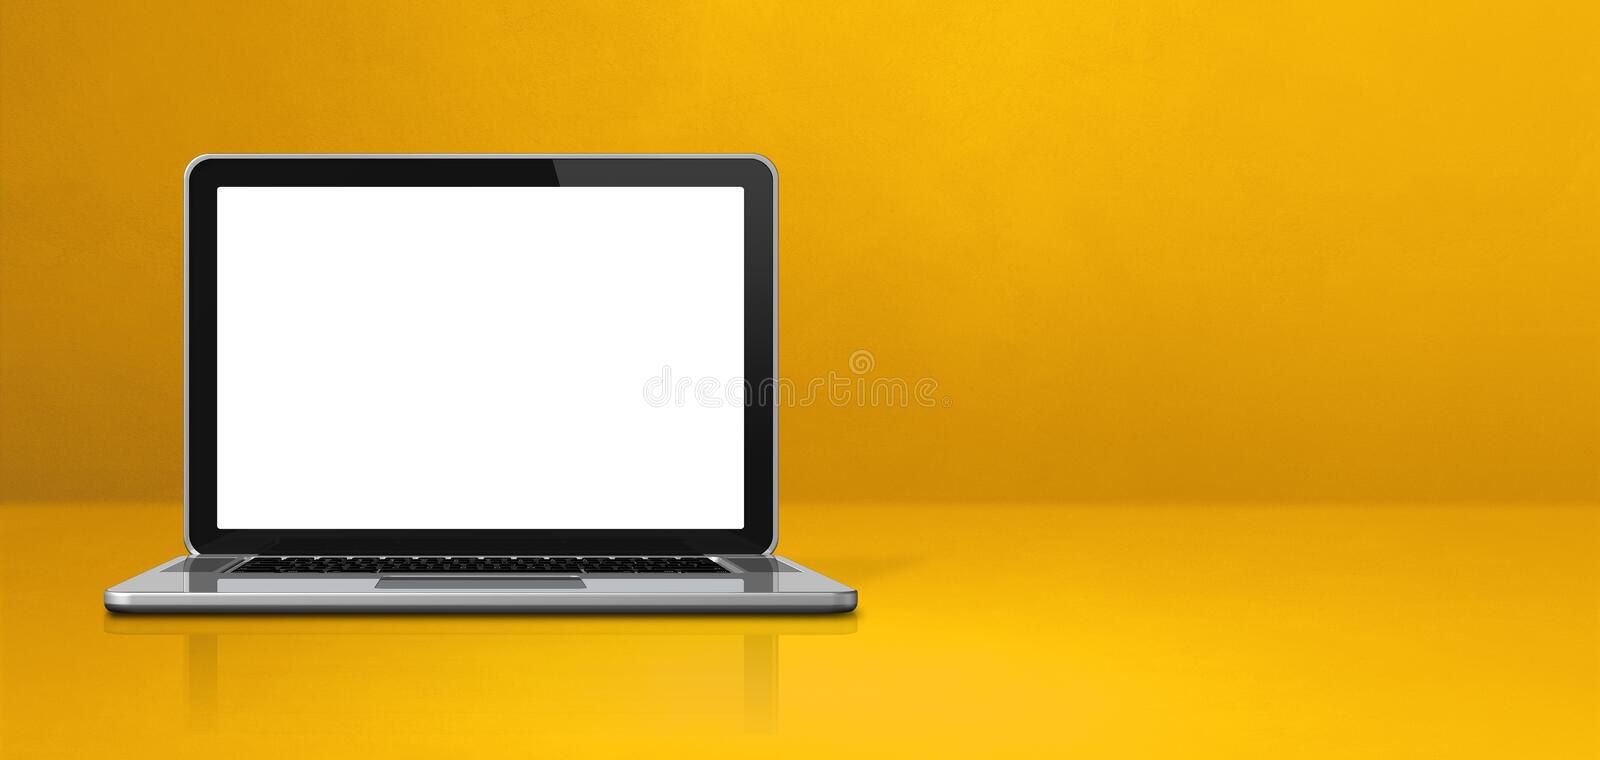 computadora-porttil-con-banner-de-fondo-escena-oficina-amarilla-amarillo-ilustracin-d-205827114